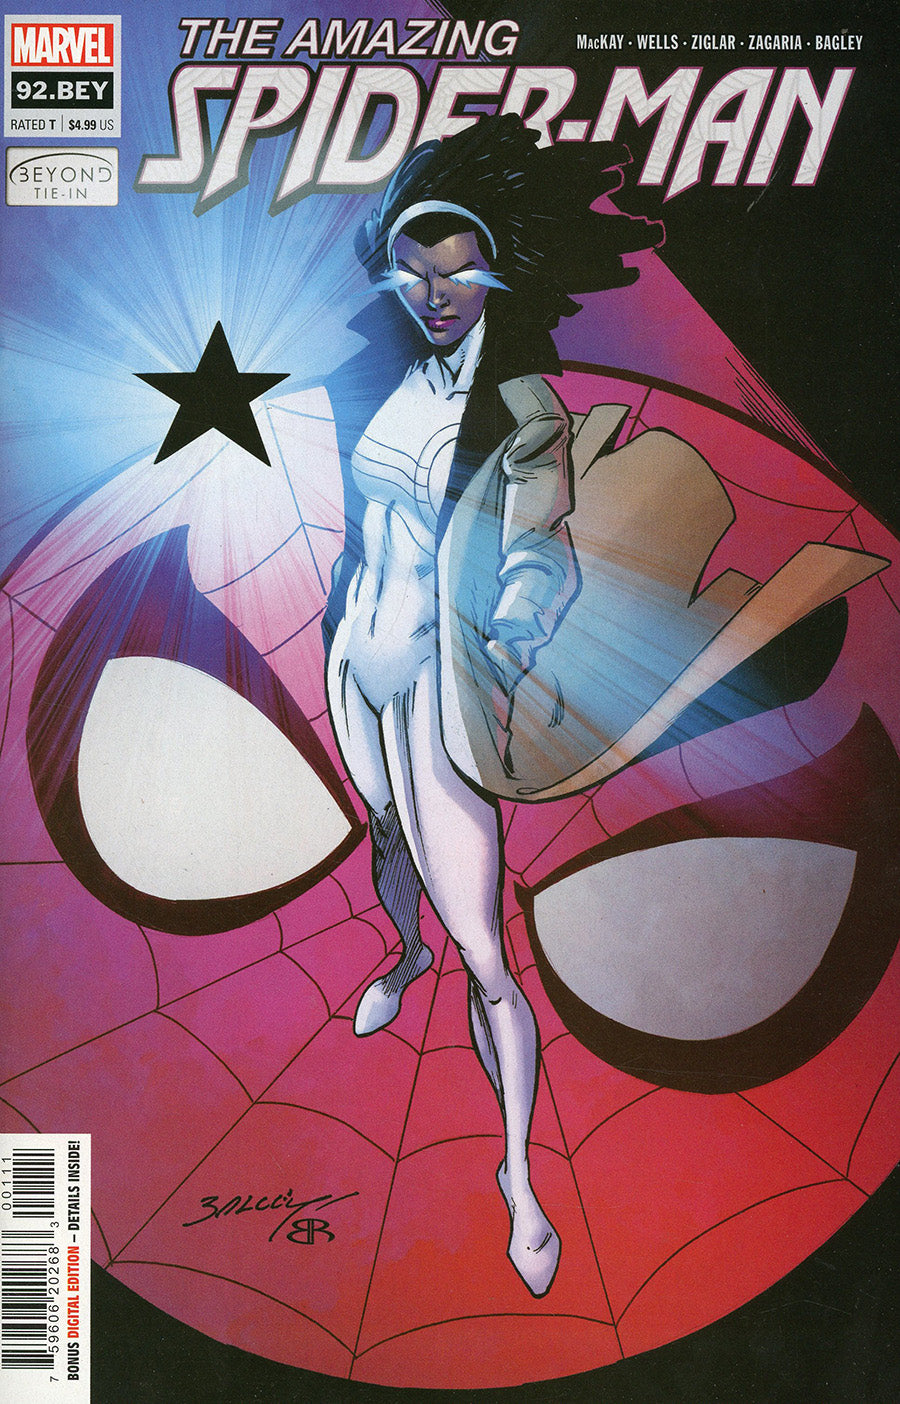 Marvel Comics - Amazing Spider-Man Vol 5 #92BEY